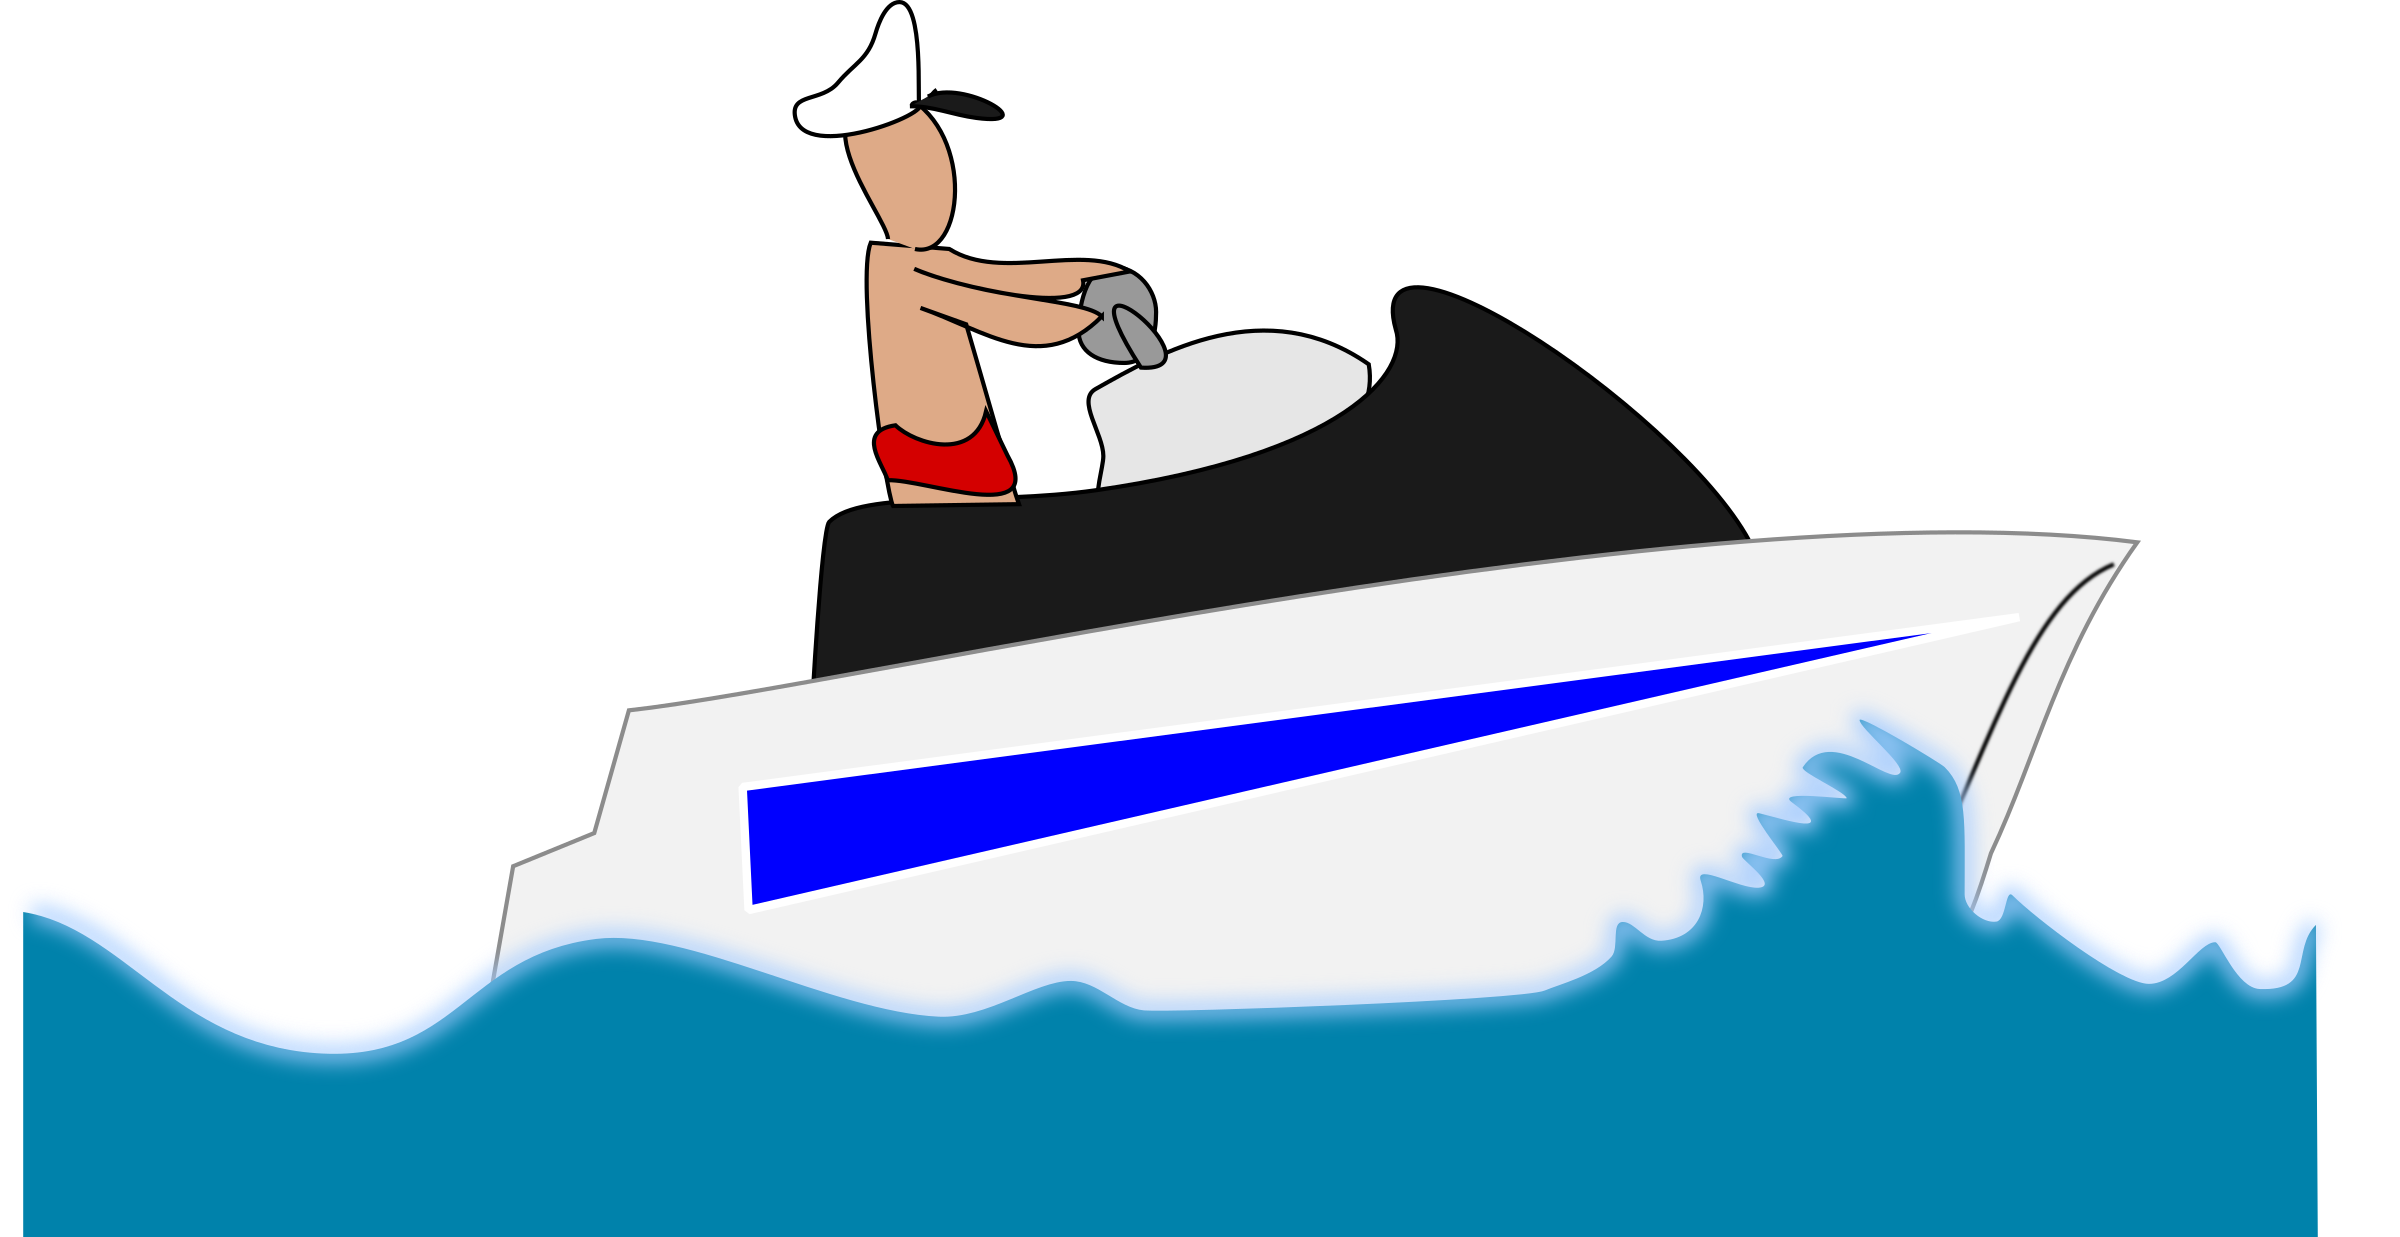 Leisure Boat sketched SVG Clip arts